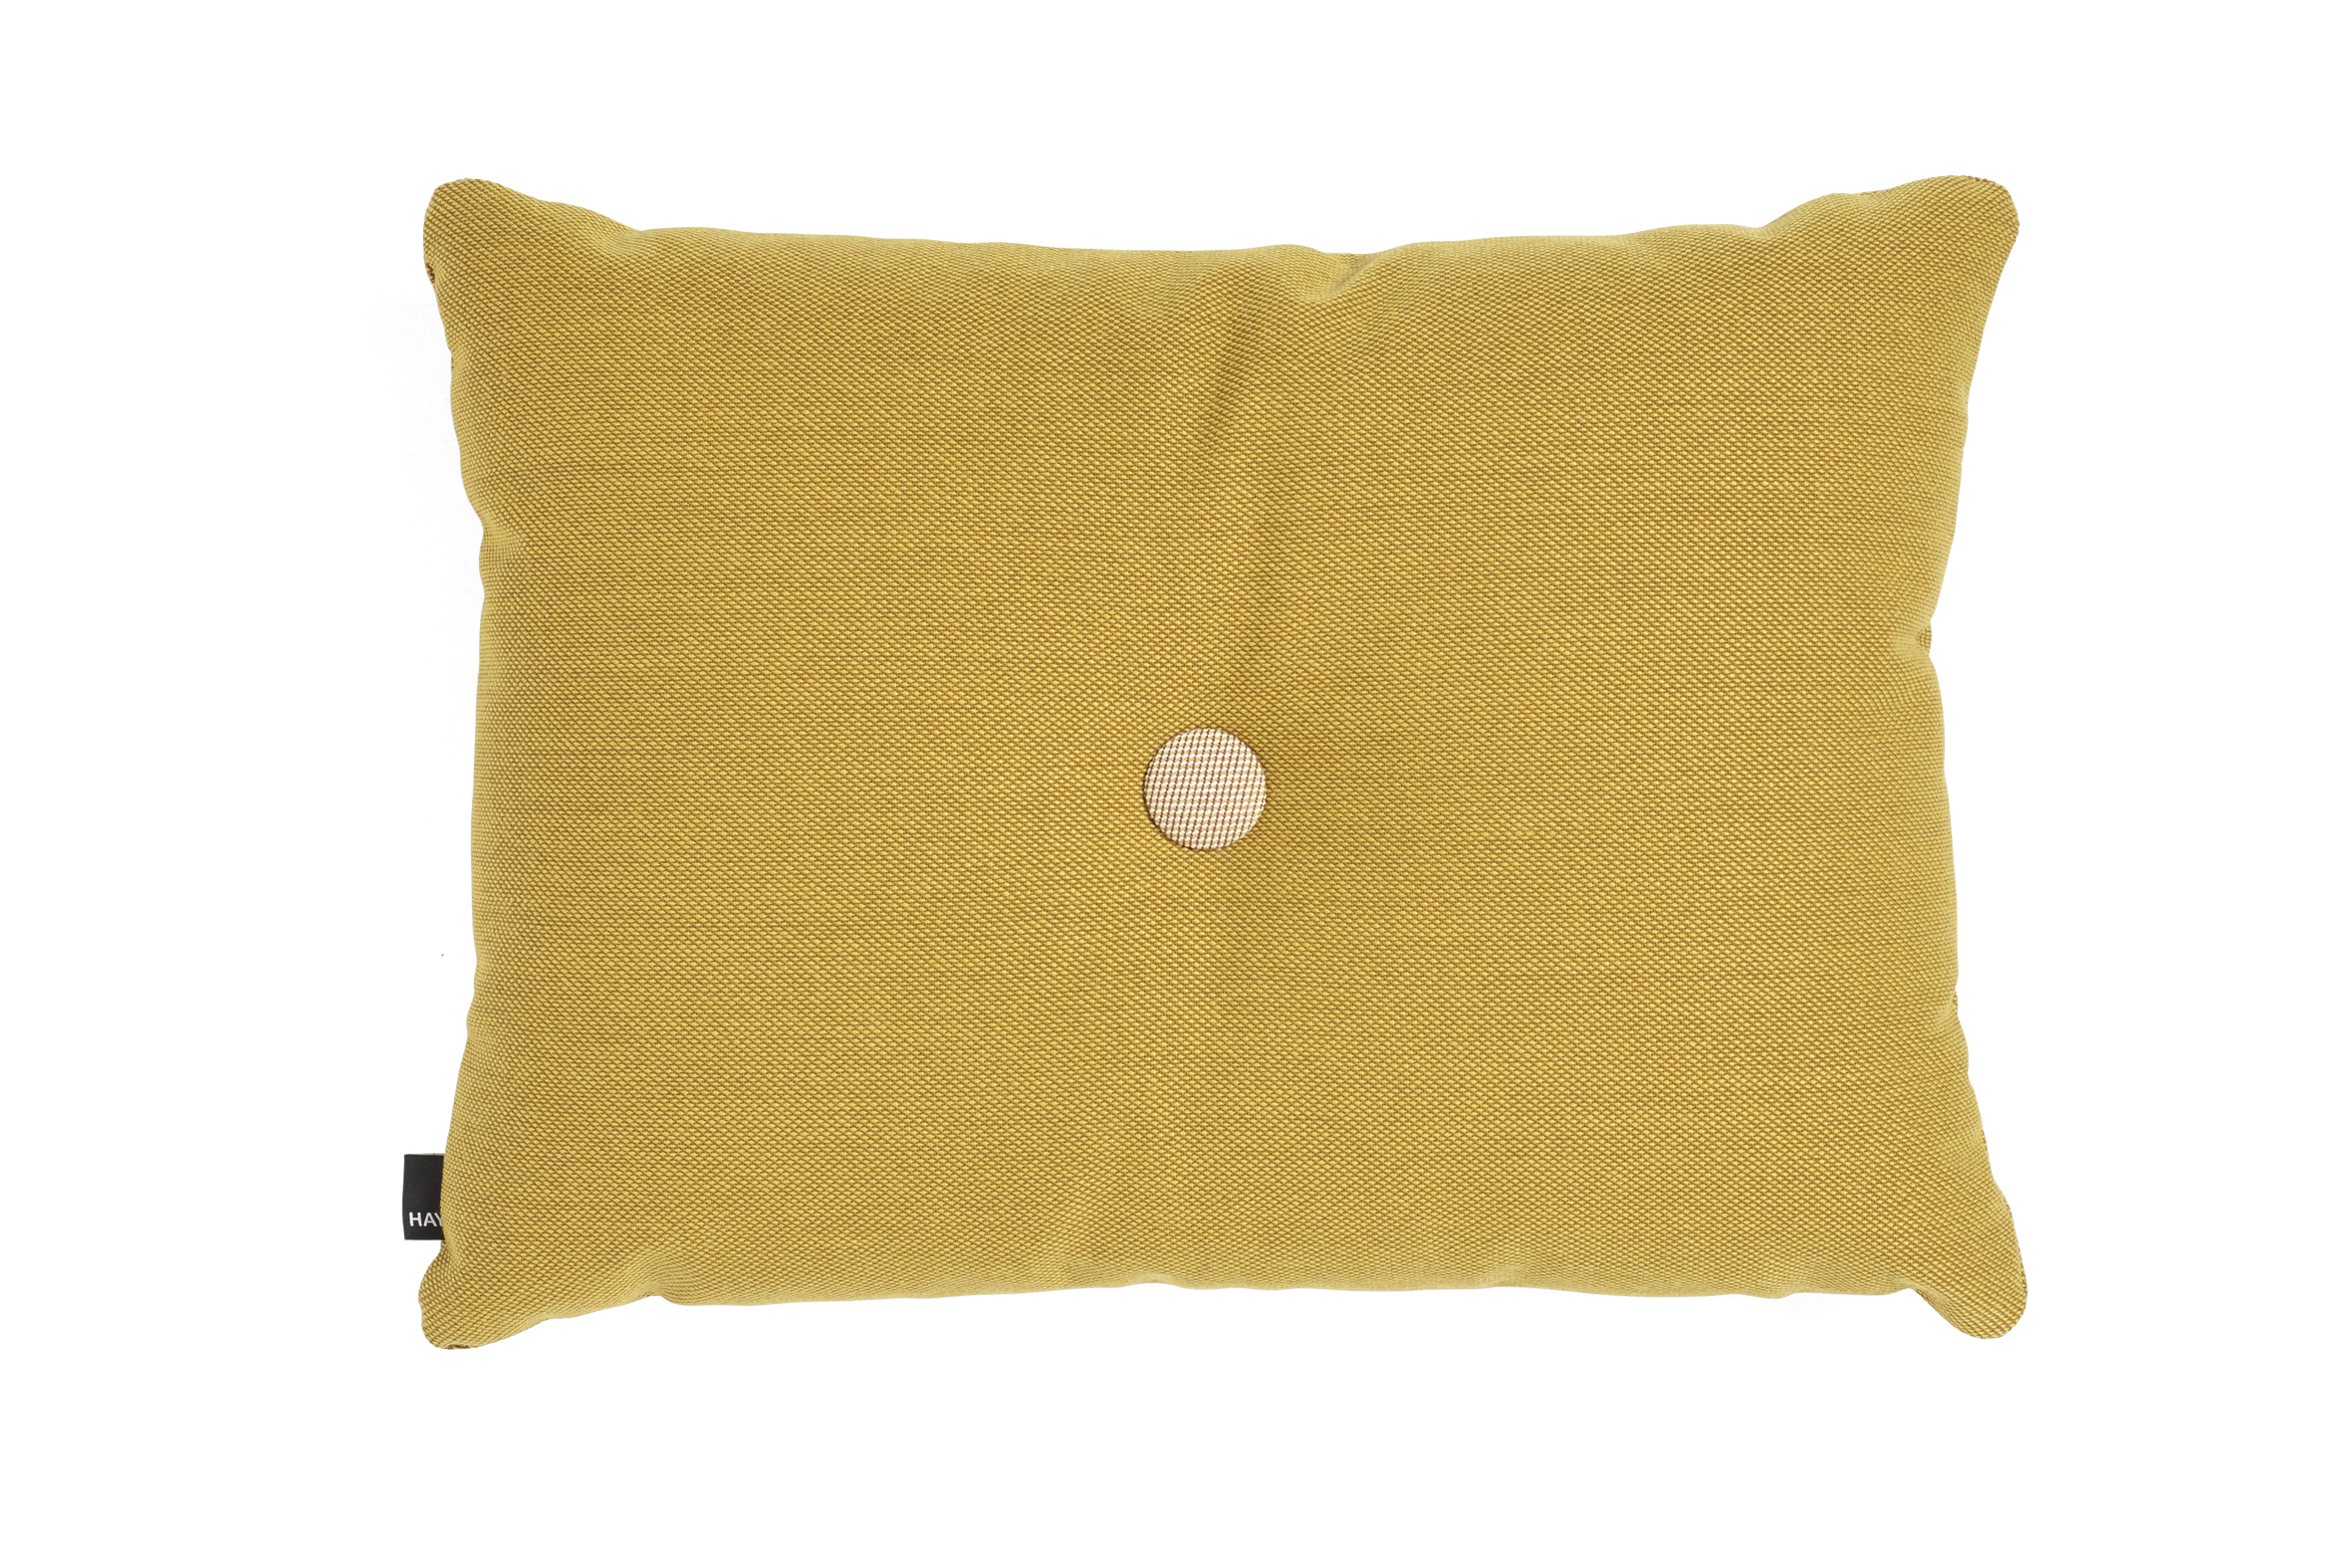 Dot cushion ST 1 dot golden yellow